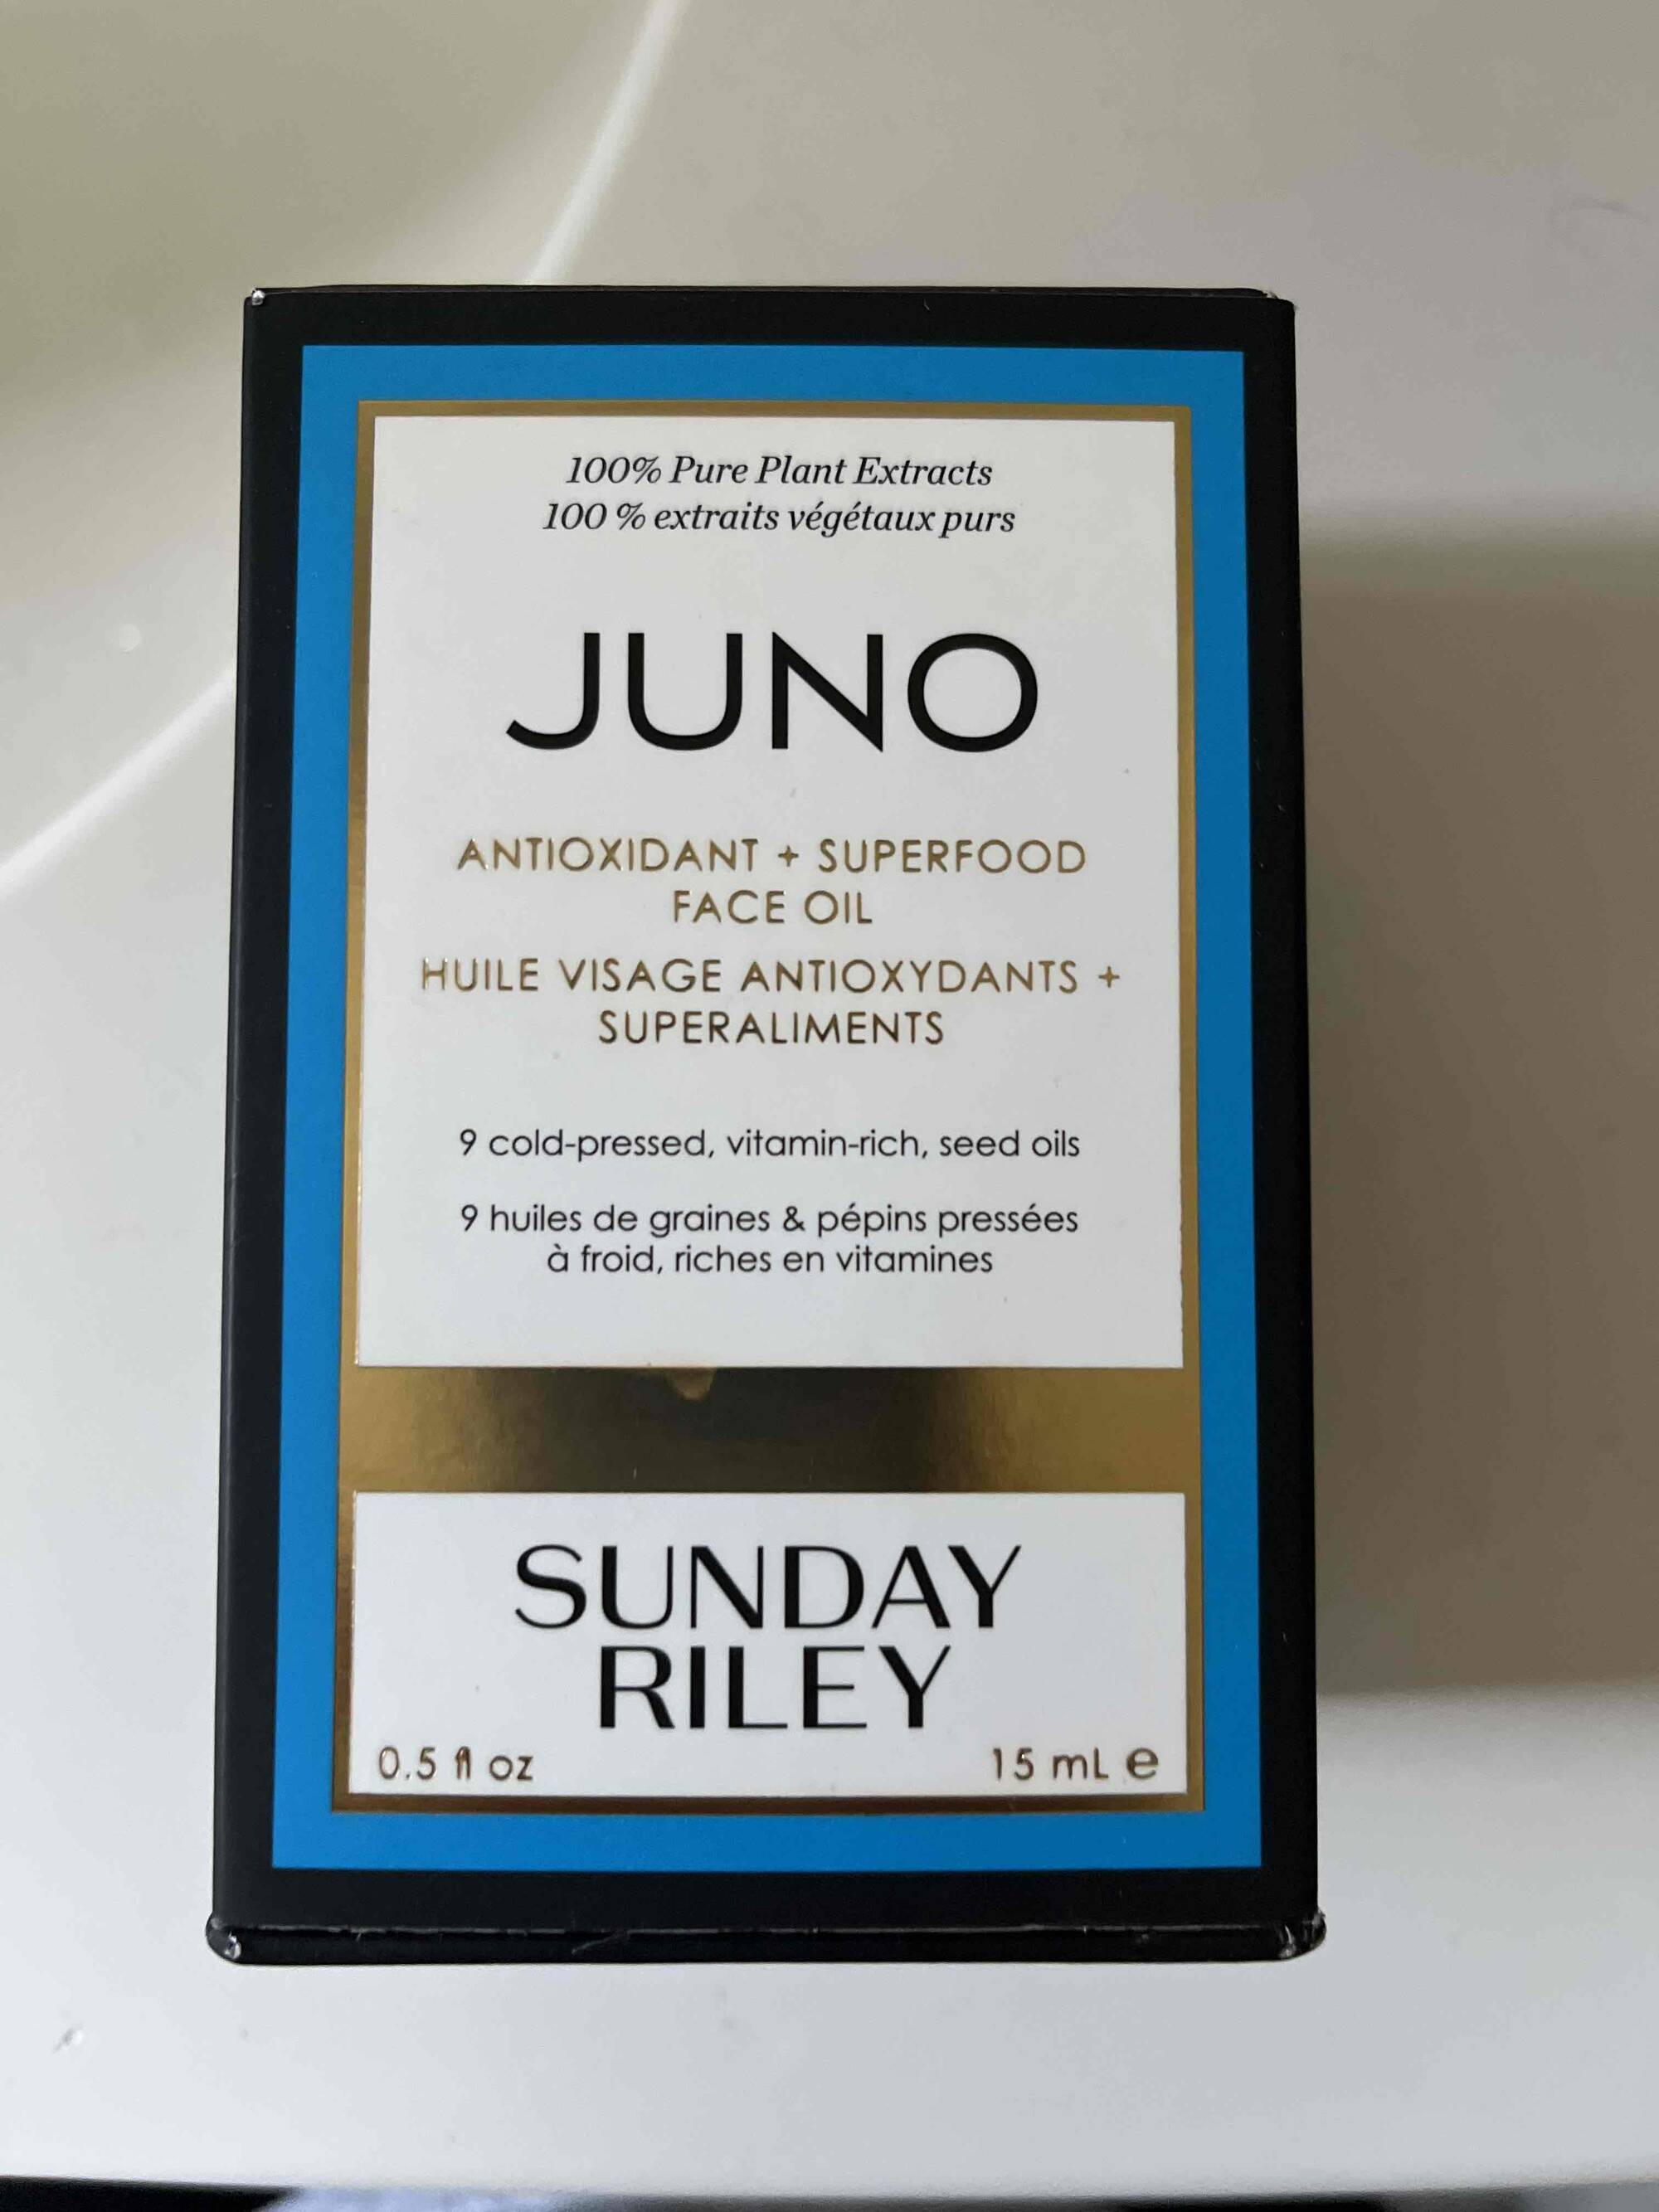 SUNDAY RILEY - Juno - huile visage antioxydants + superaliments